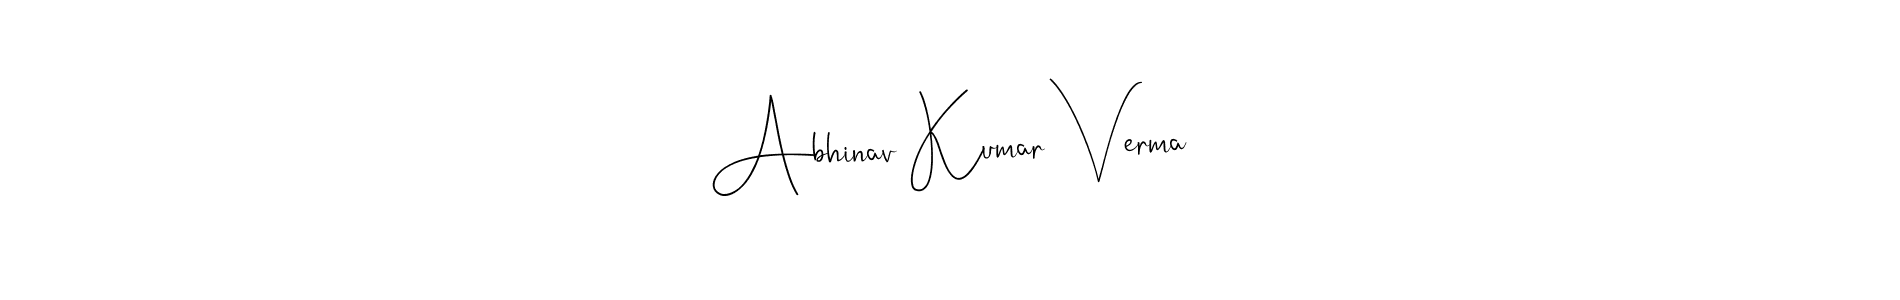 How to Draw Abhinav Kumar Verma signature style? Andilay-7BmLP is a latest design signature styles for name Abhinav Kumar Verma. Abhinav Kumar Verma signature style 4 images and pictures png